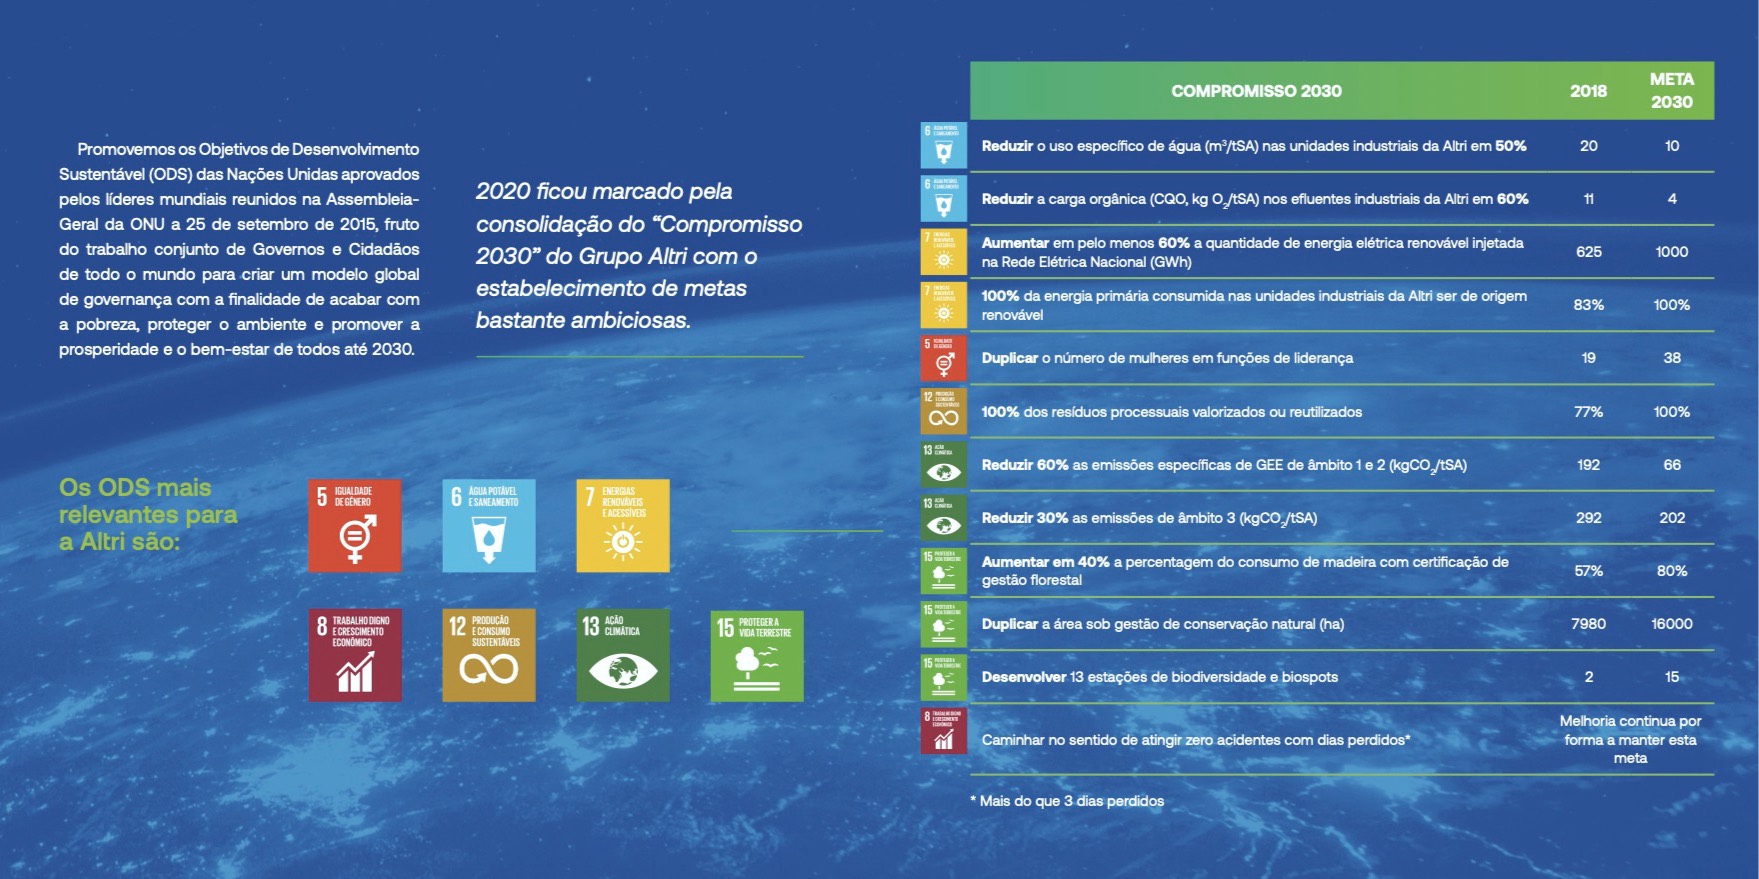 Altri define metas de sustentabilidade com “Compromisso 2030”